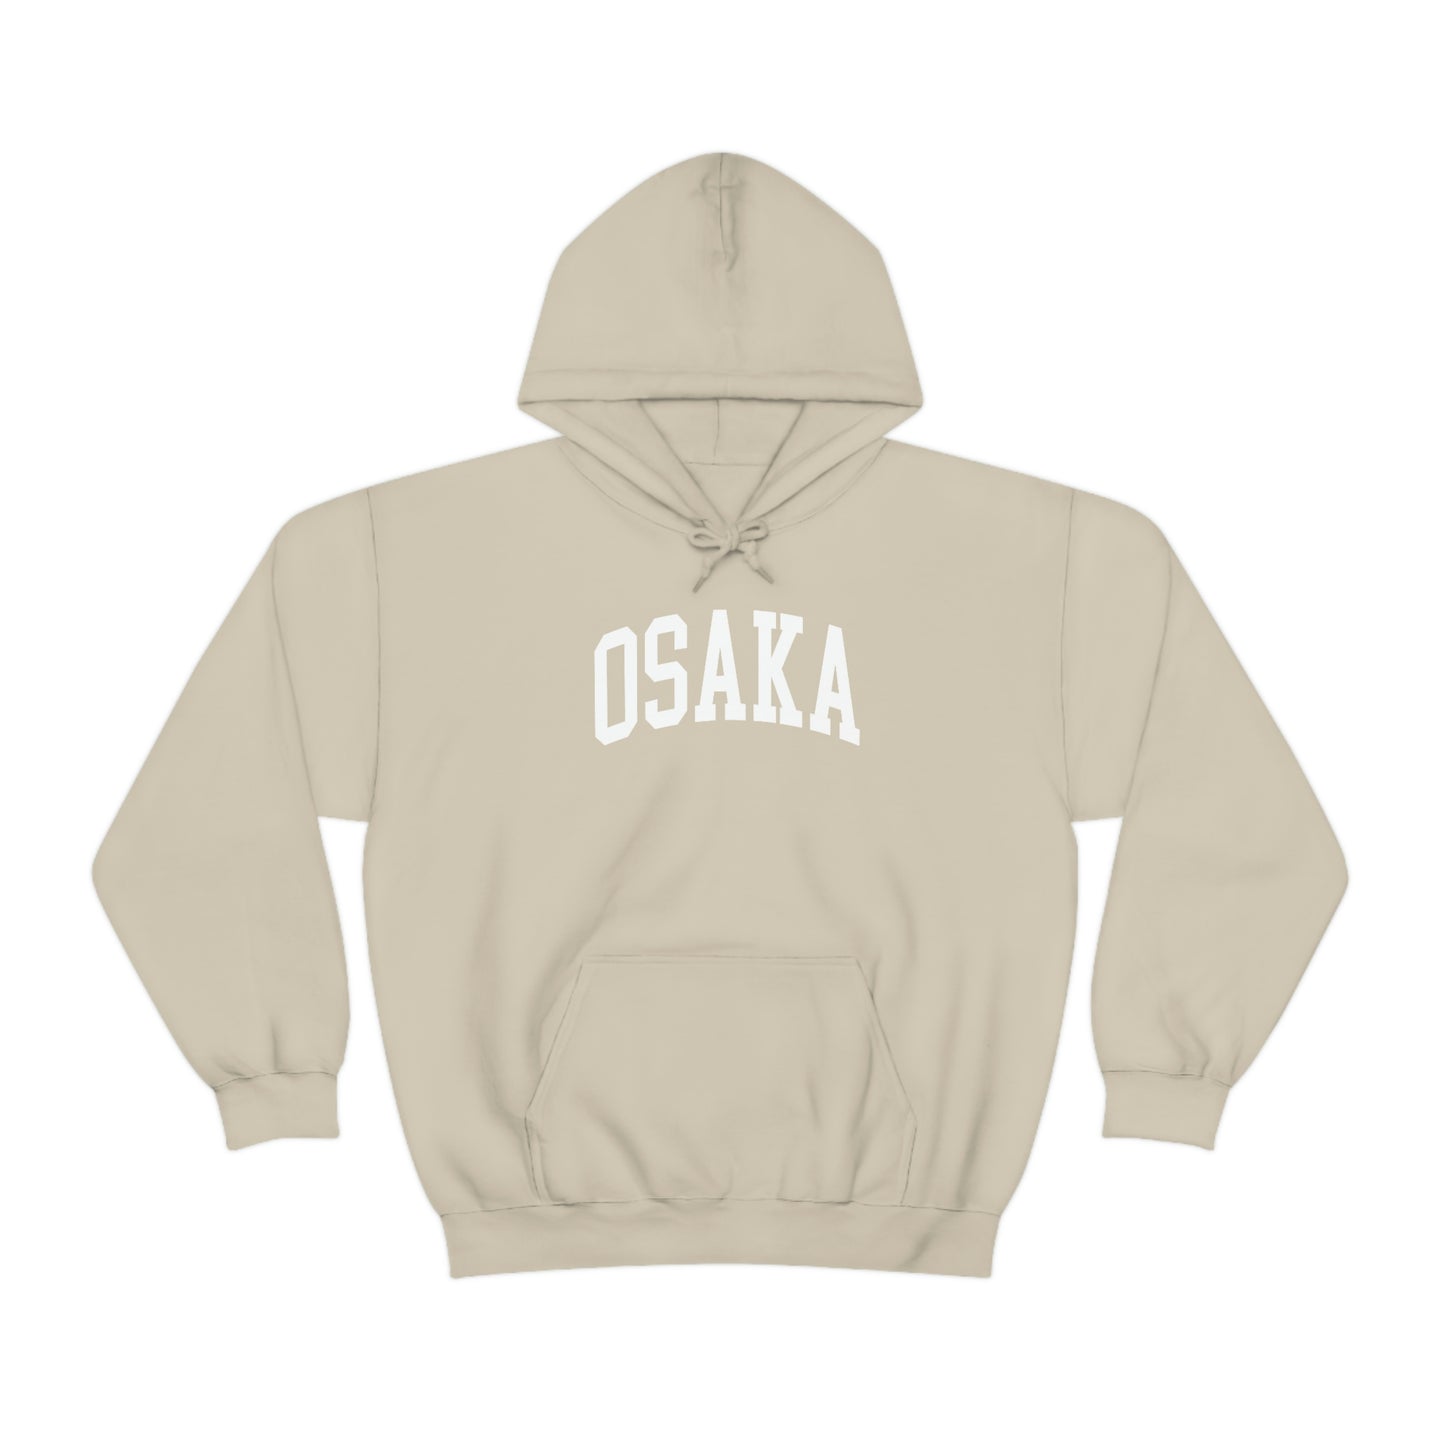 Osaka Hoodie Osaka Japan Hooded Sweatshirt College Style Pullover Vintage Inspired Sweater